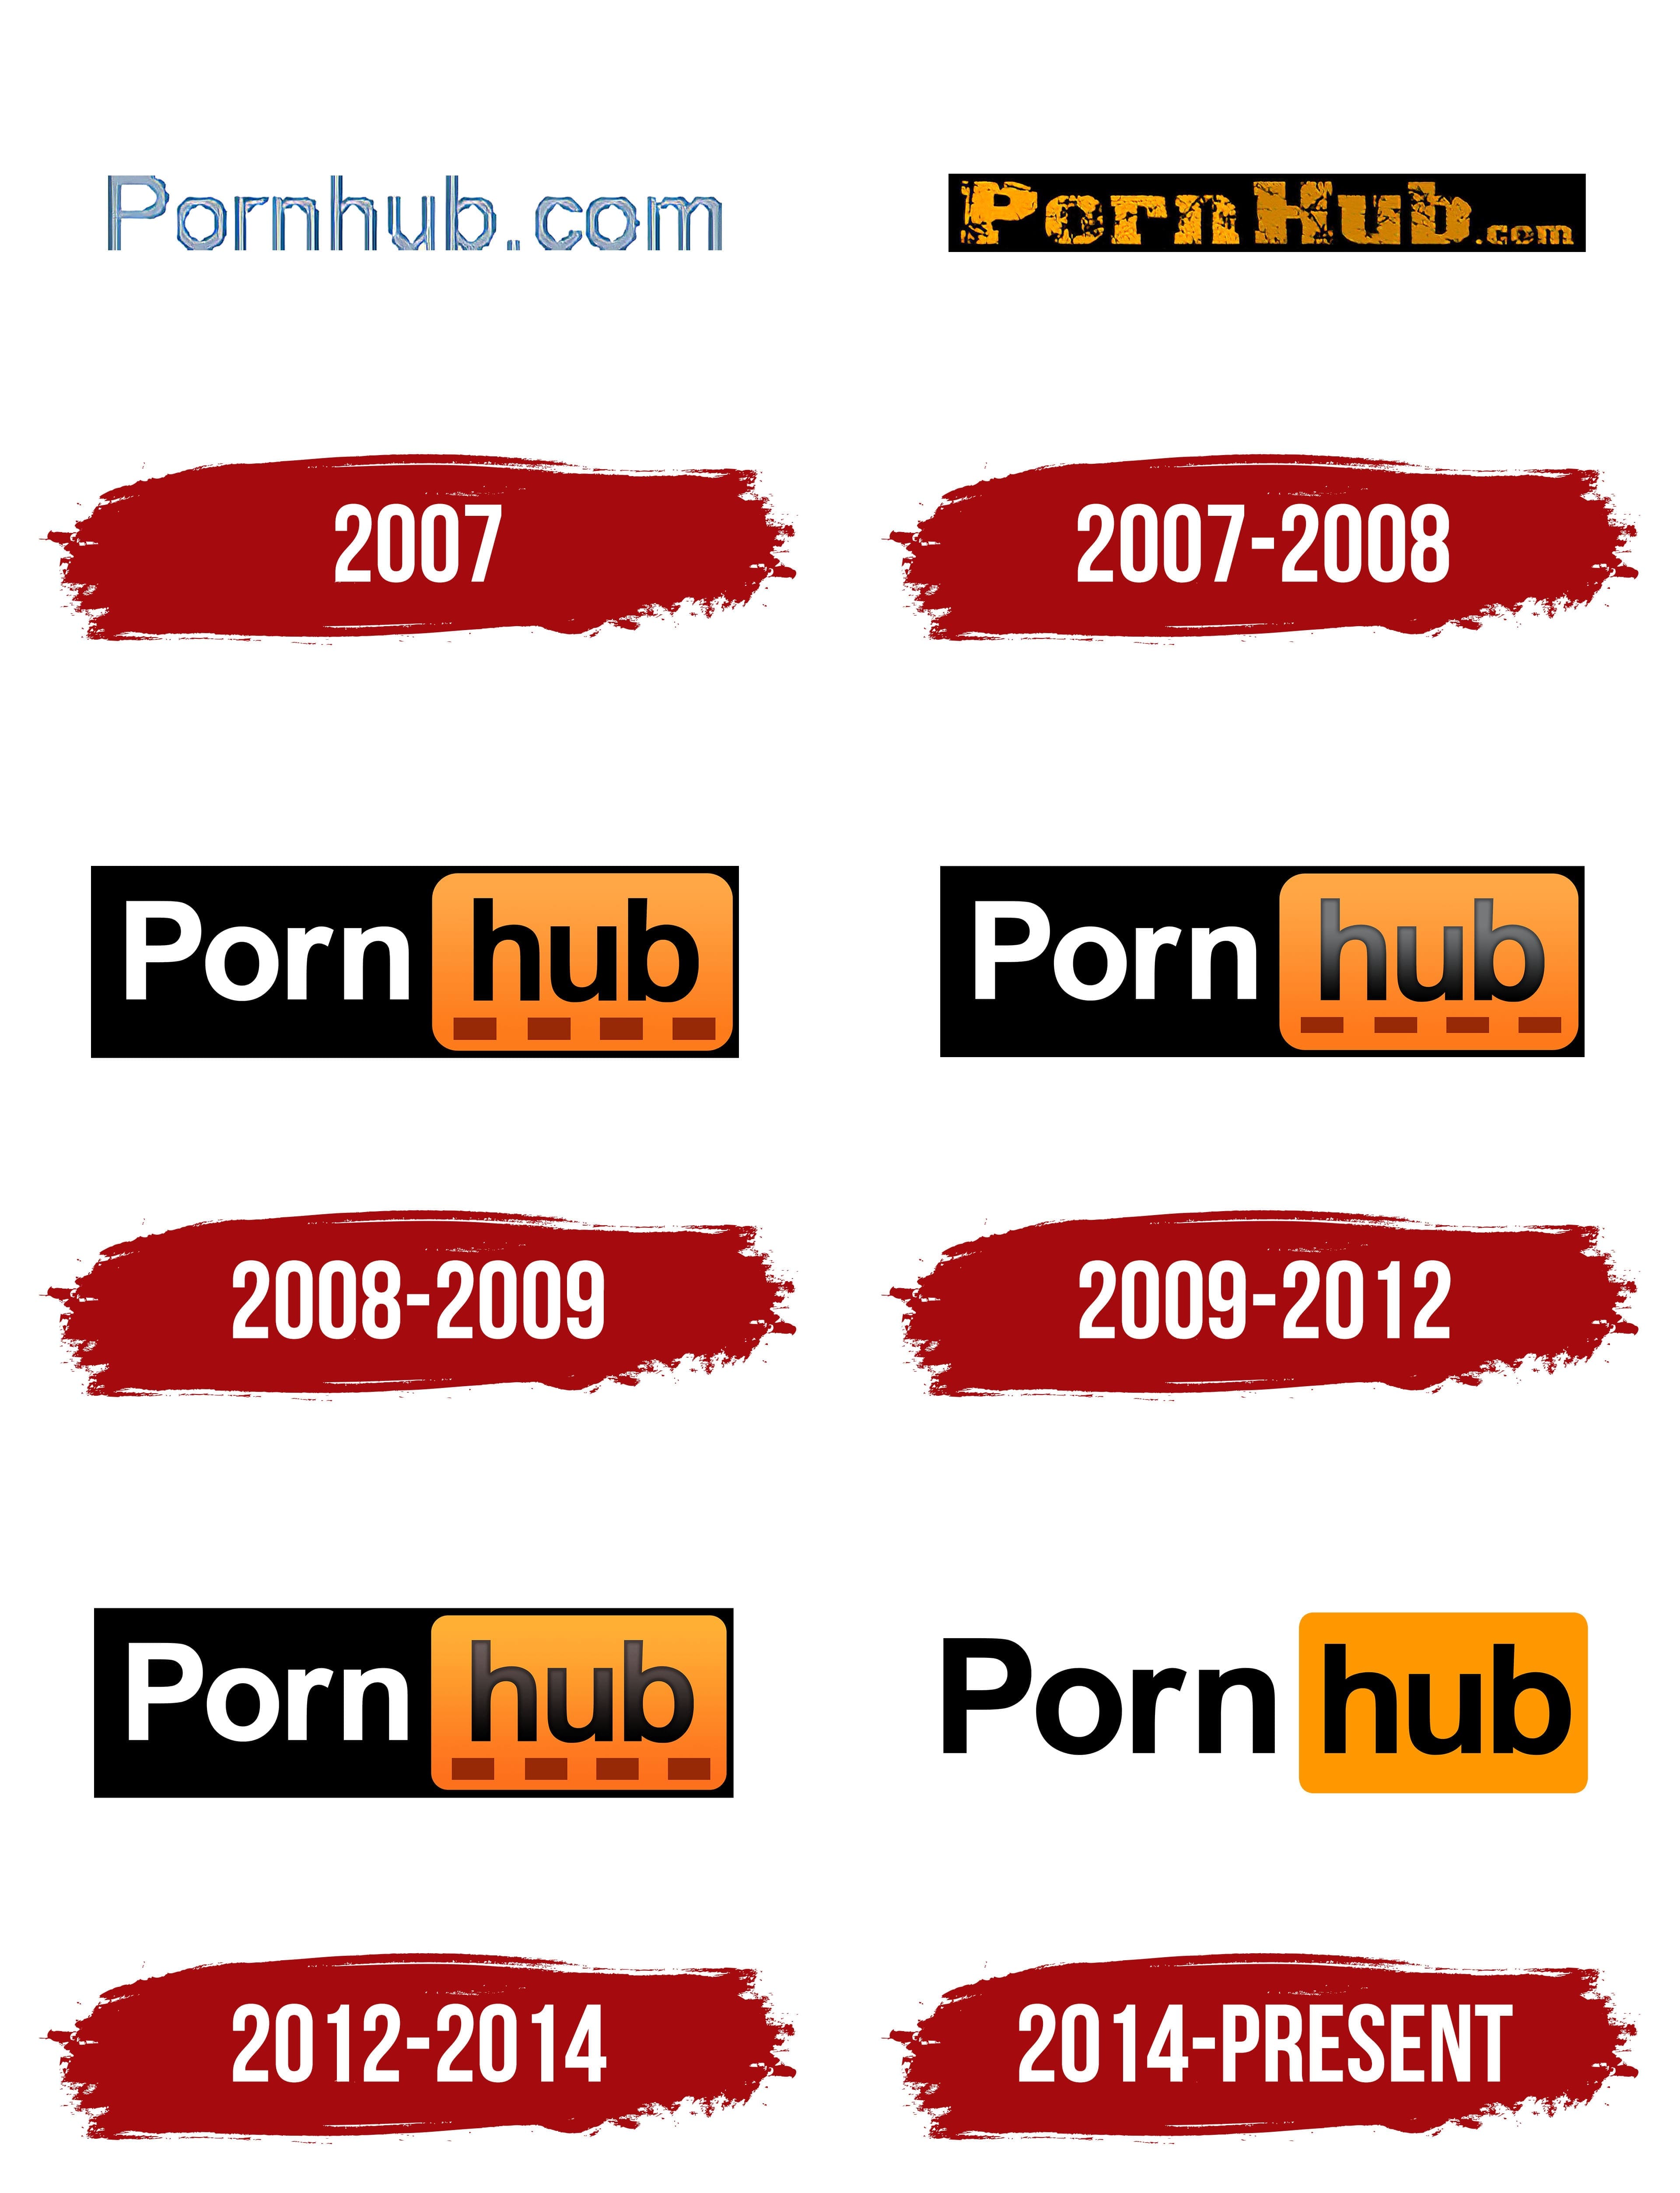 amin huhu recommends porn hub new pic